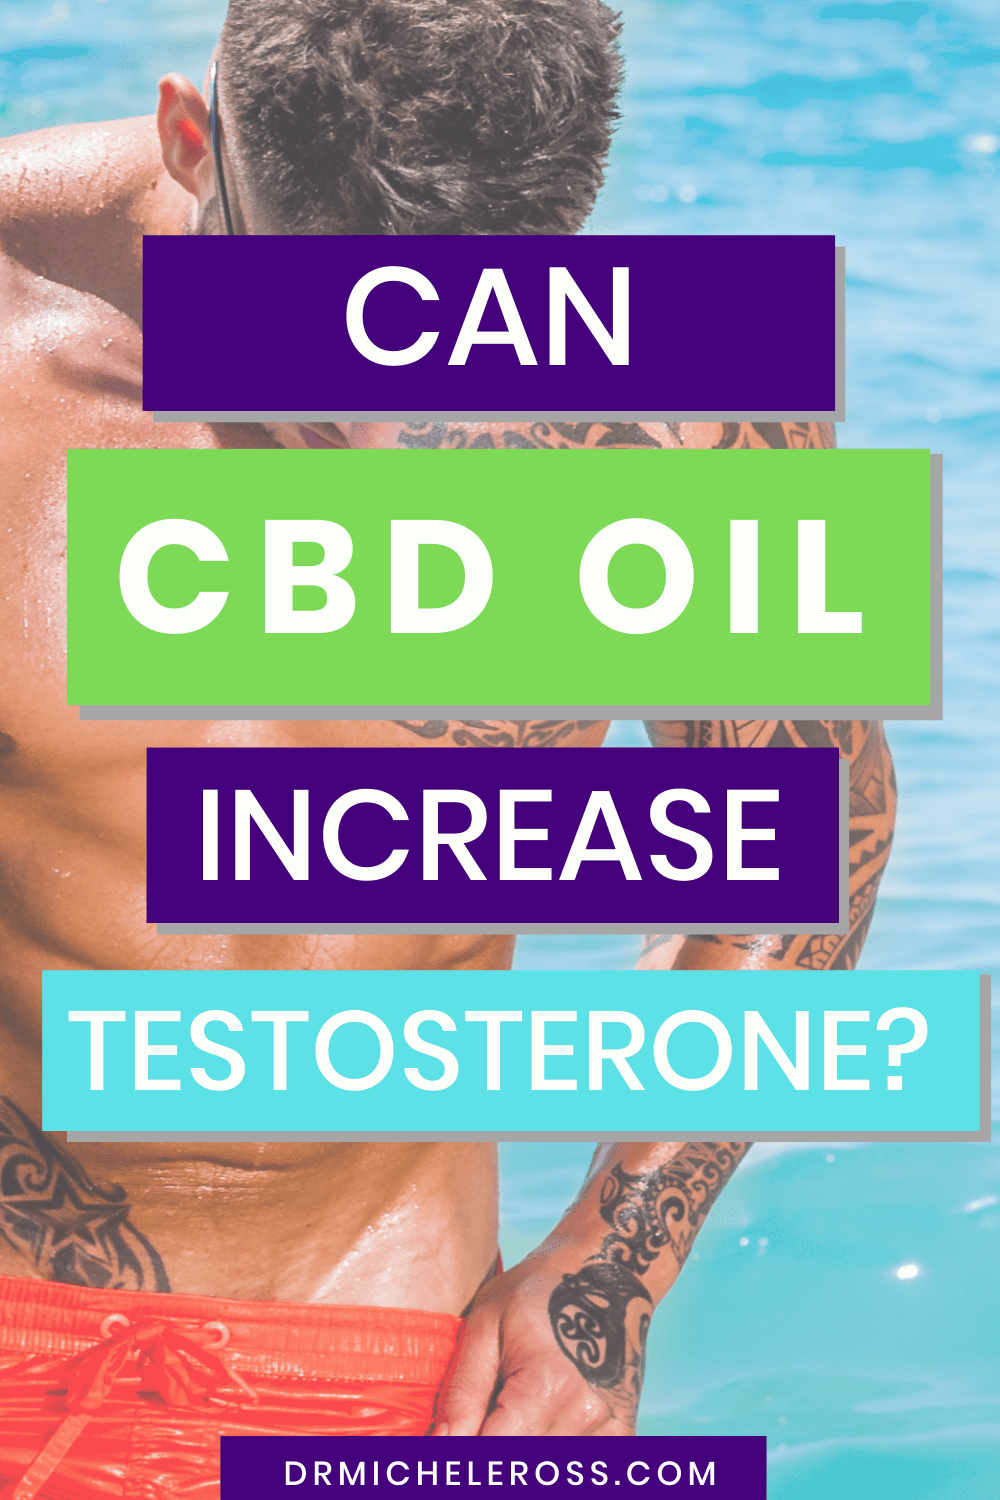 Does CBD Oil Increase Testosterone?